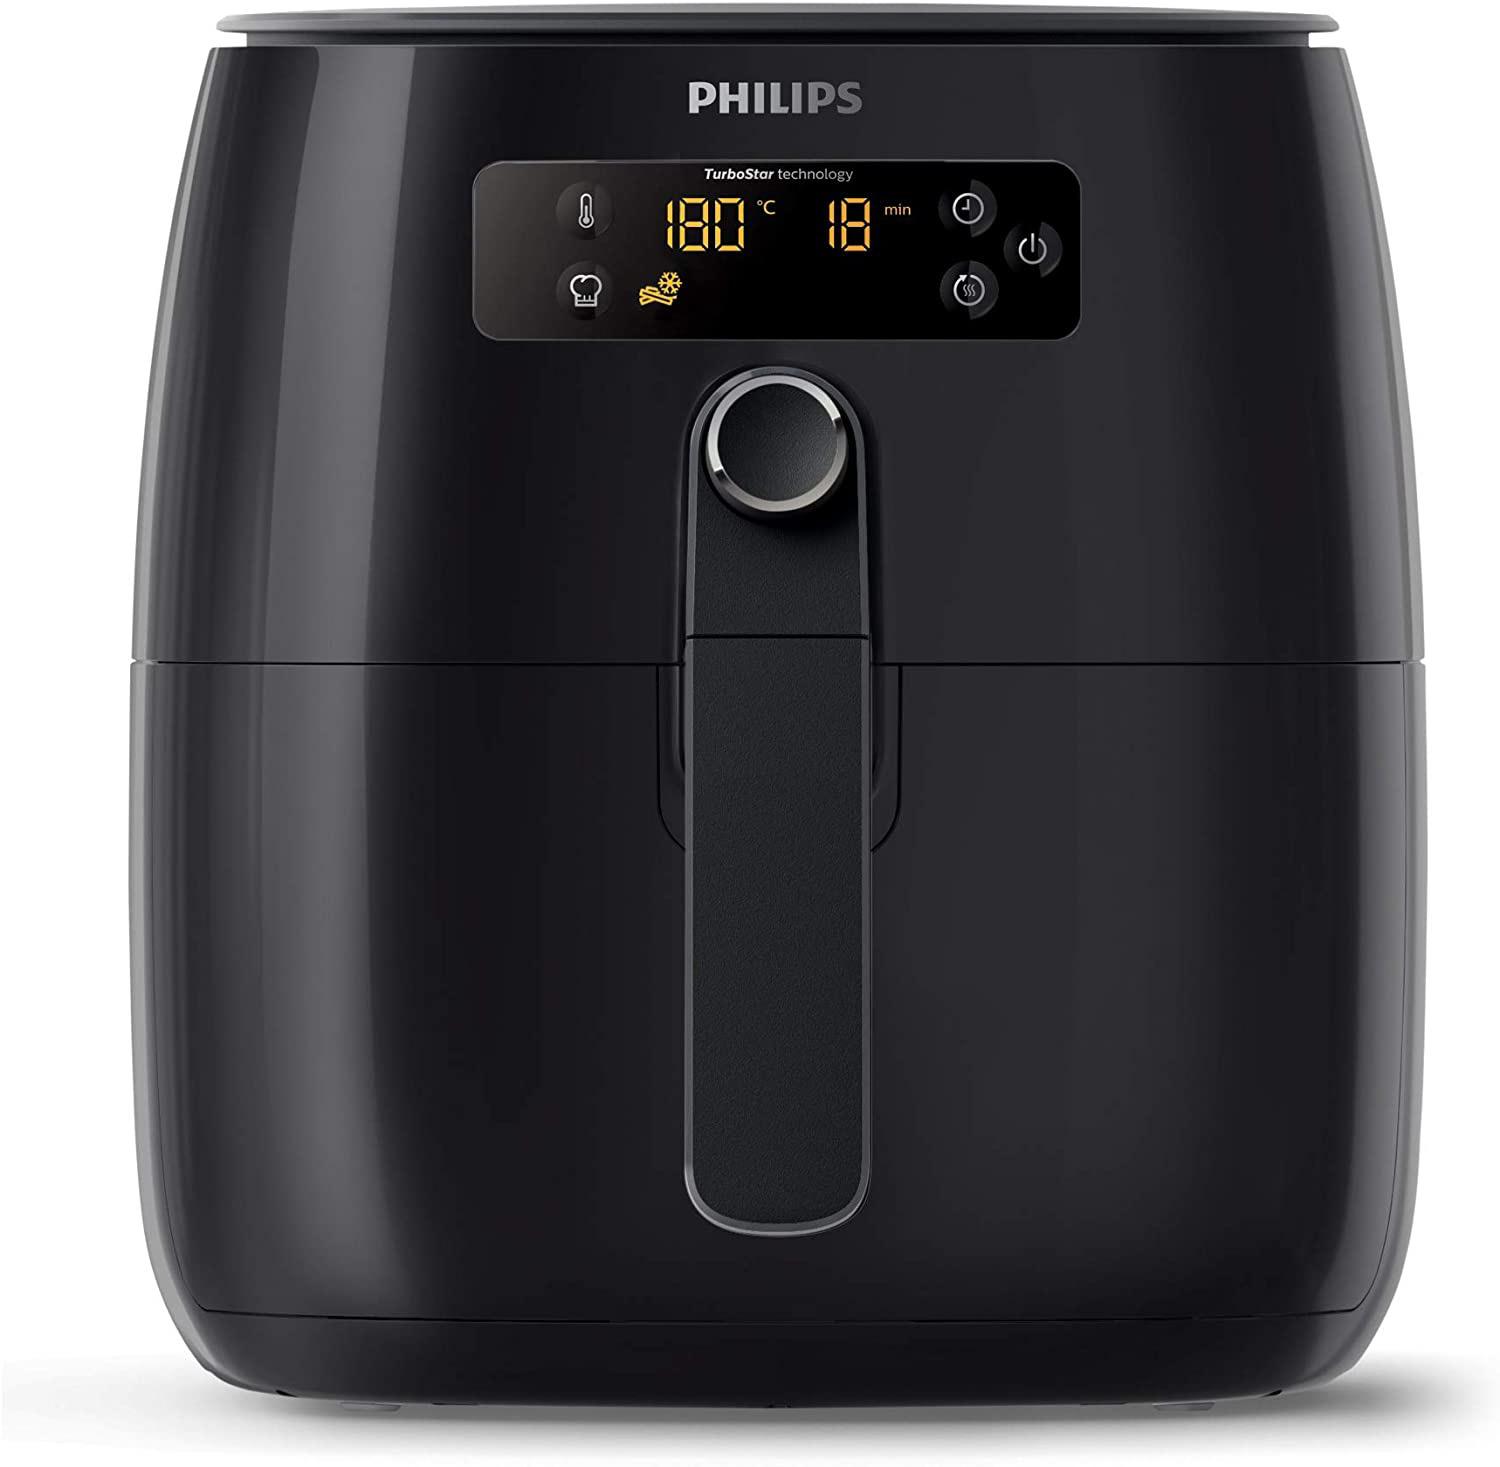 Philips Kitchen Appliances Avance Digital Turbostar Airfryer for $187.46 Shipped